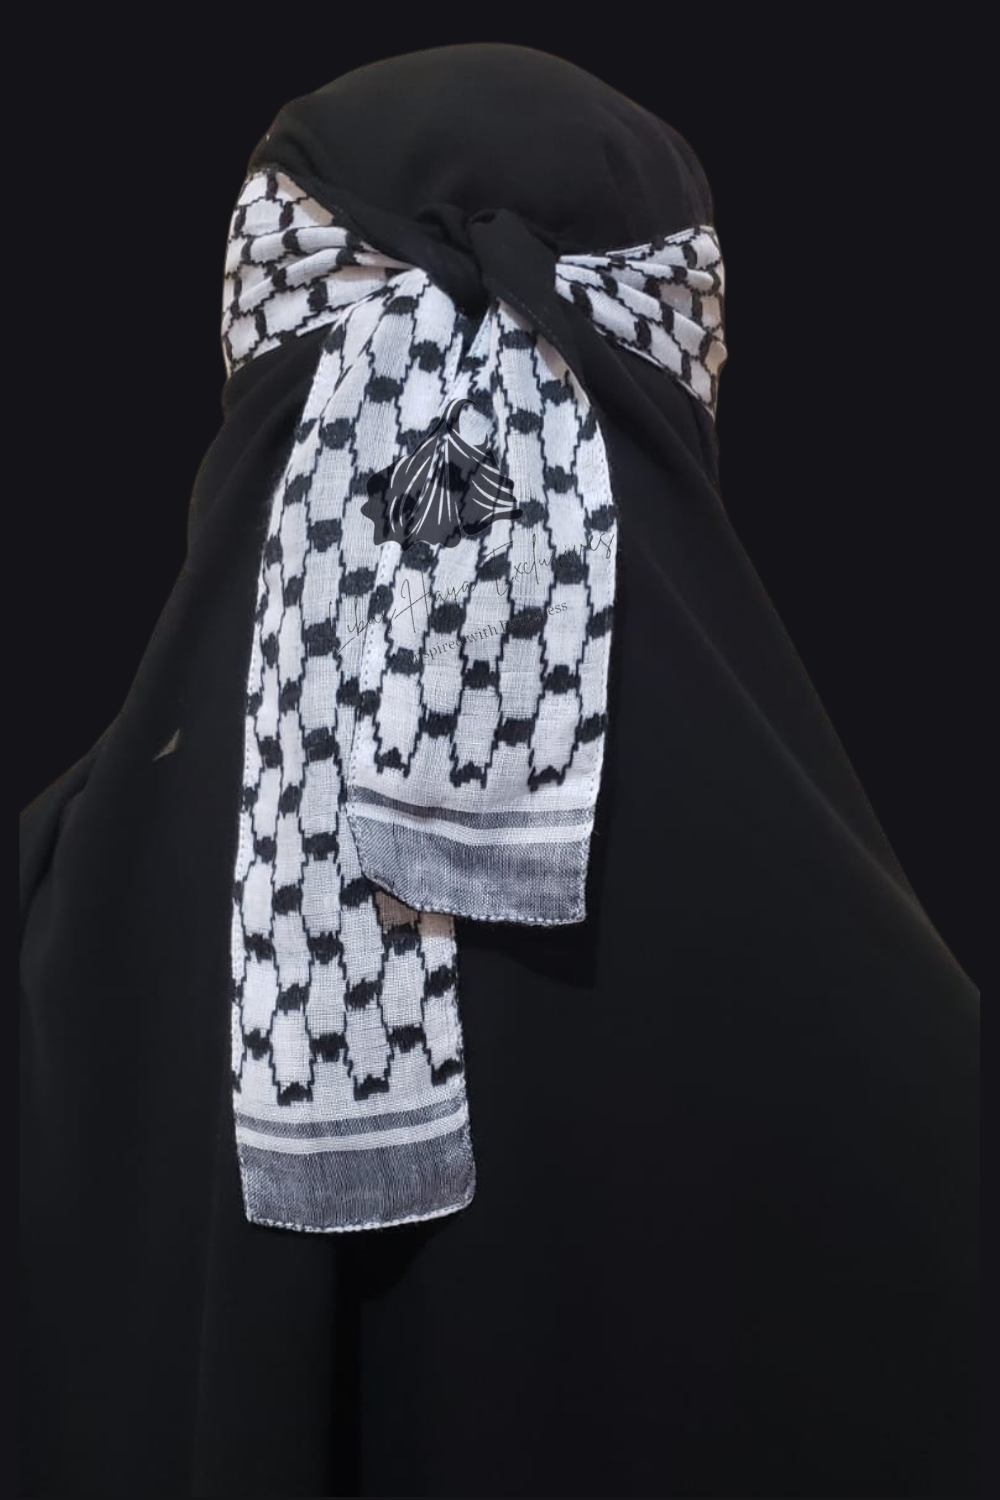 saudi niqab with tie bac palestinian keffiyah